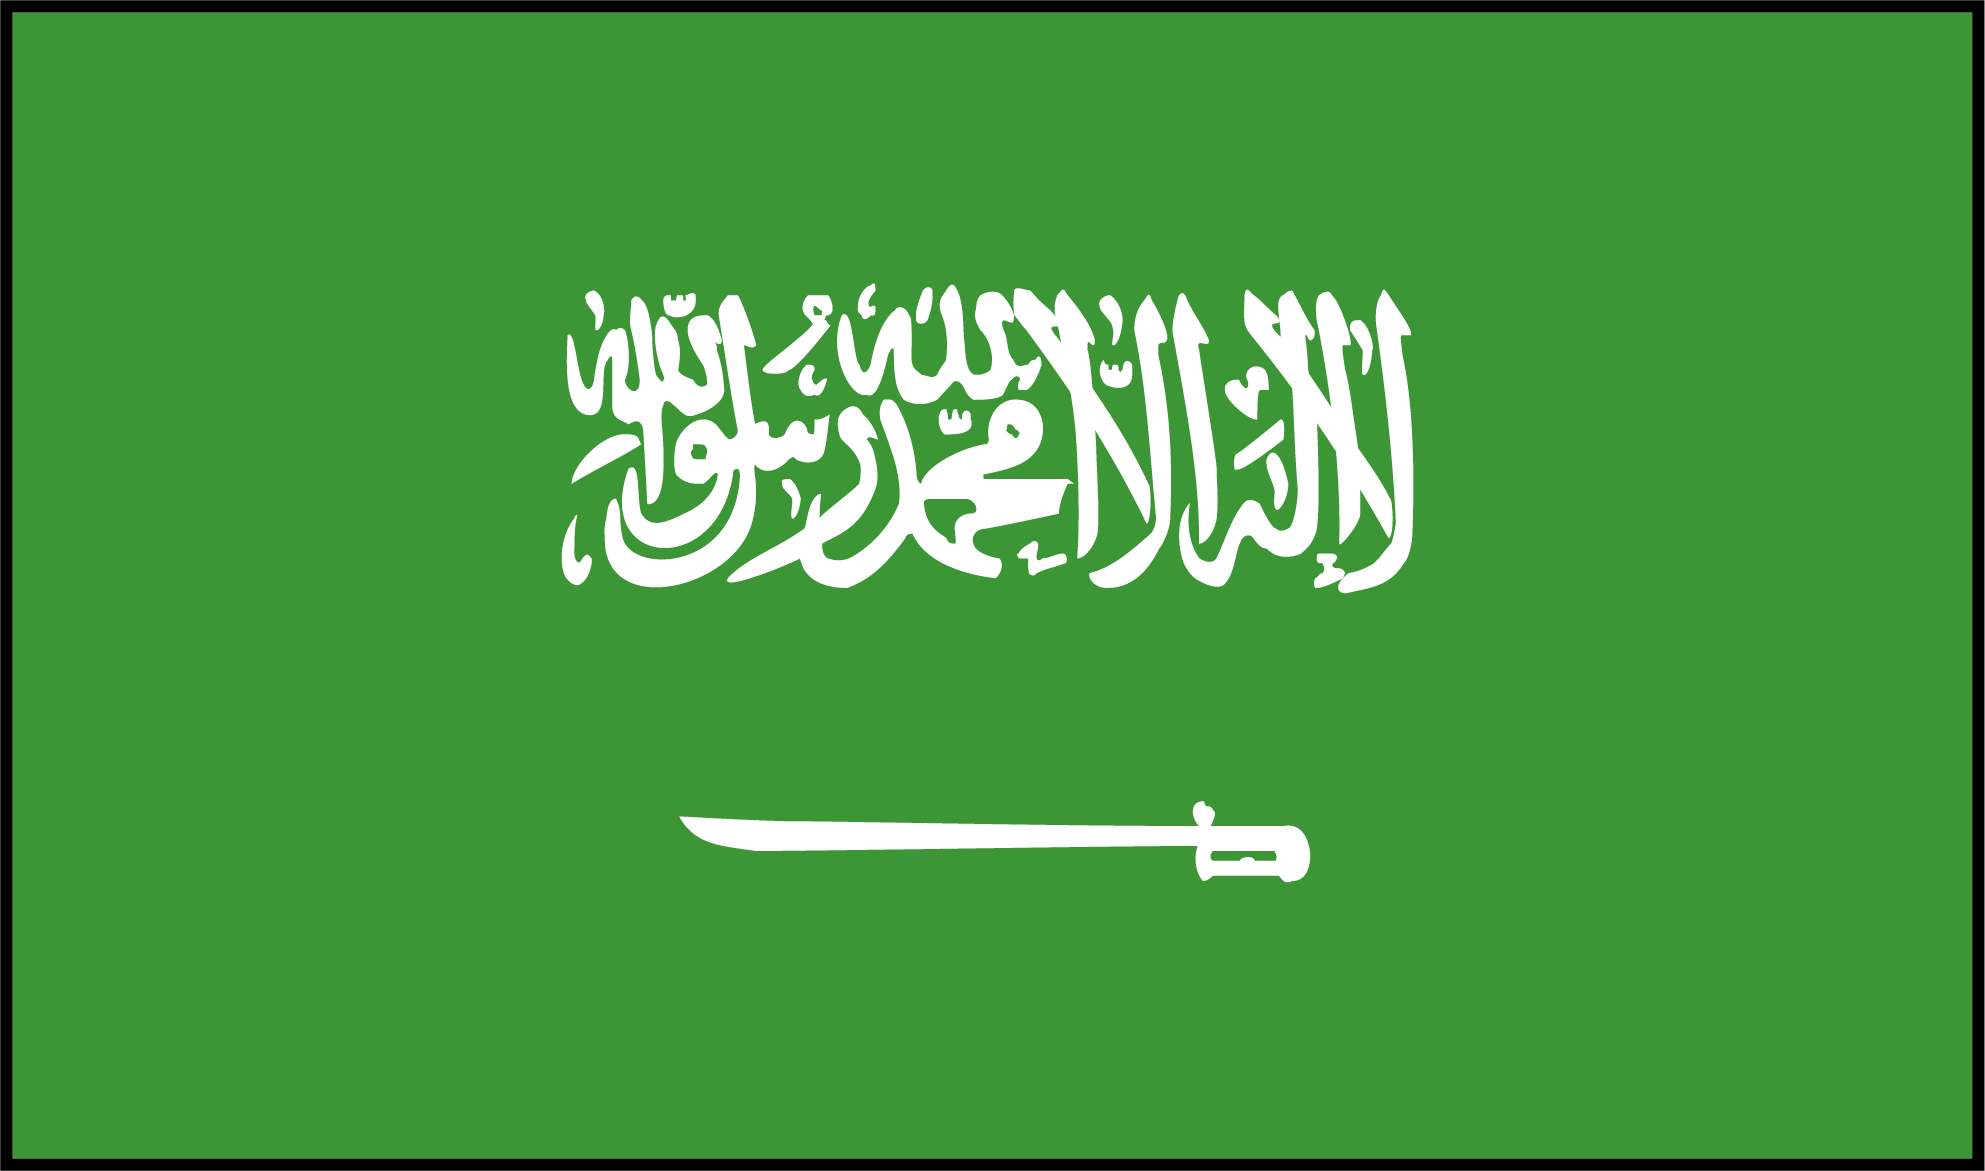 Welcome to Endeavor Saudi Arabia